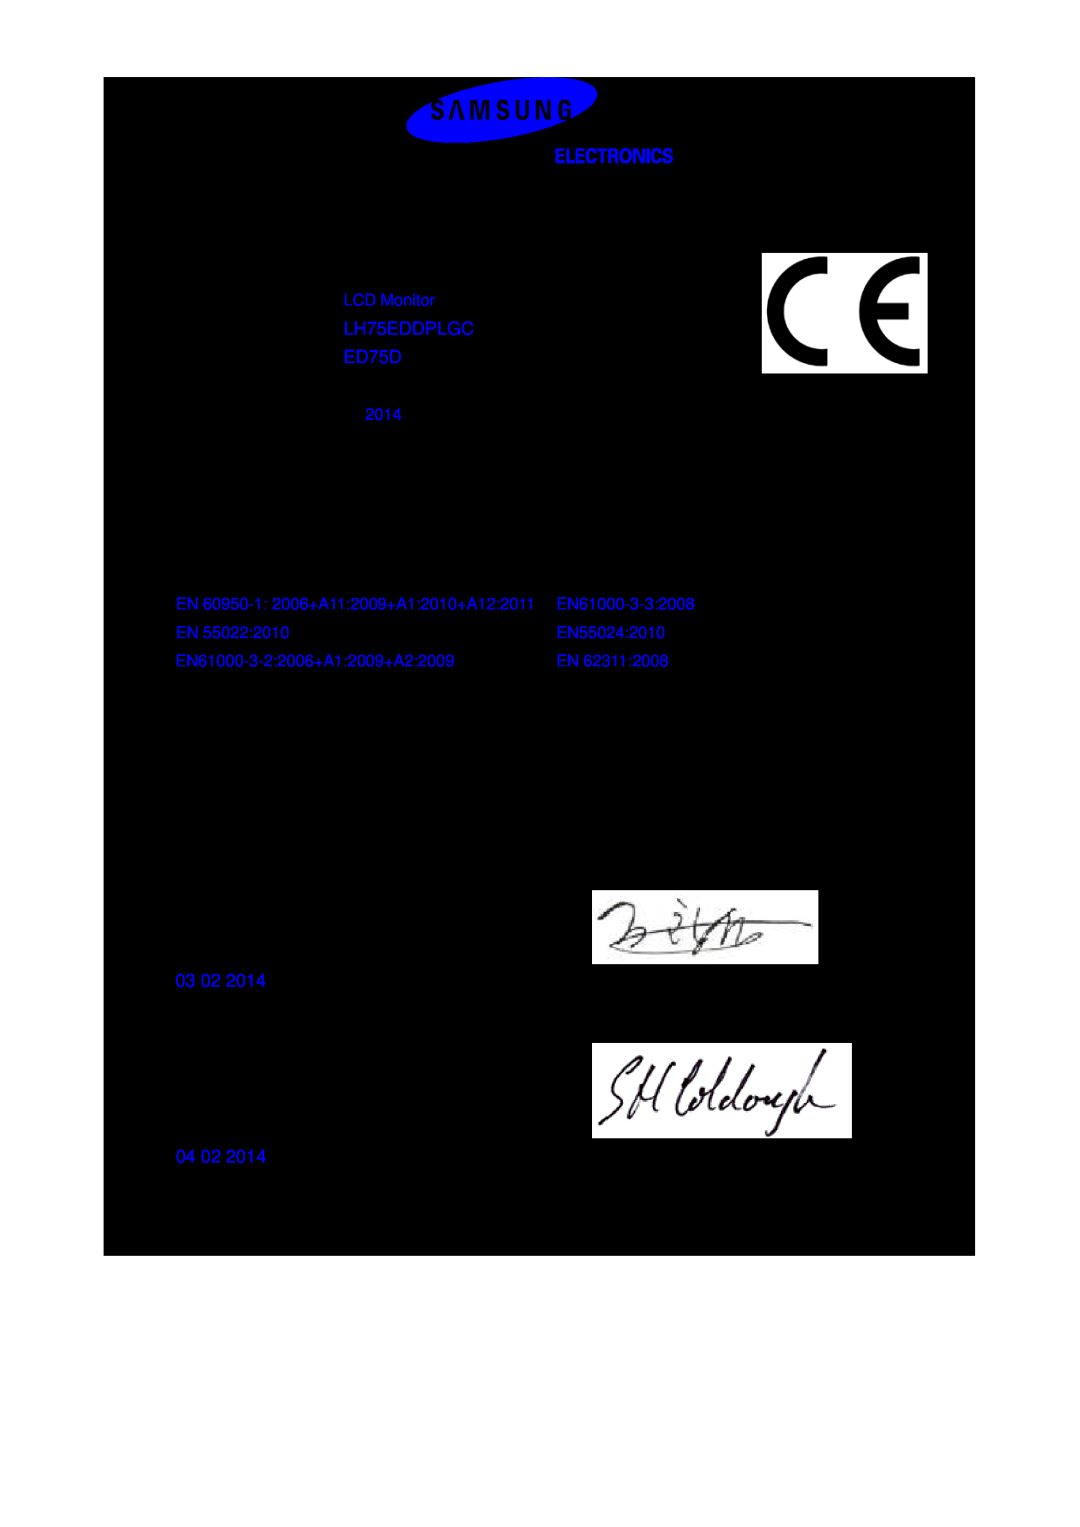 Samsung LH75EDDPLGC/EN, LH65EDDPLGC/EN, LH75EDDPLGC/NG, LH65EDDPLGC/HD manual Declaration of Conformity, ED75D, 03 02, 04 02 